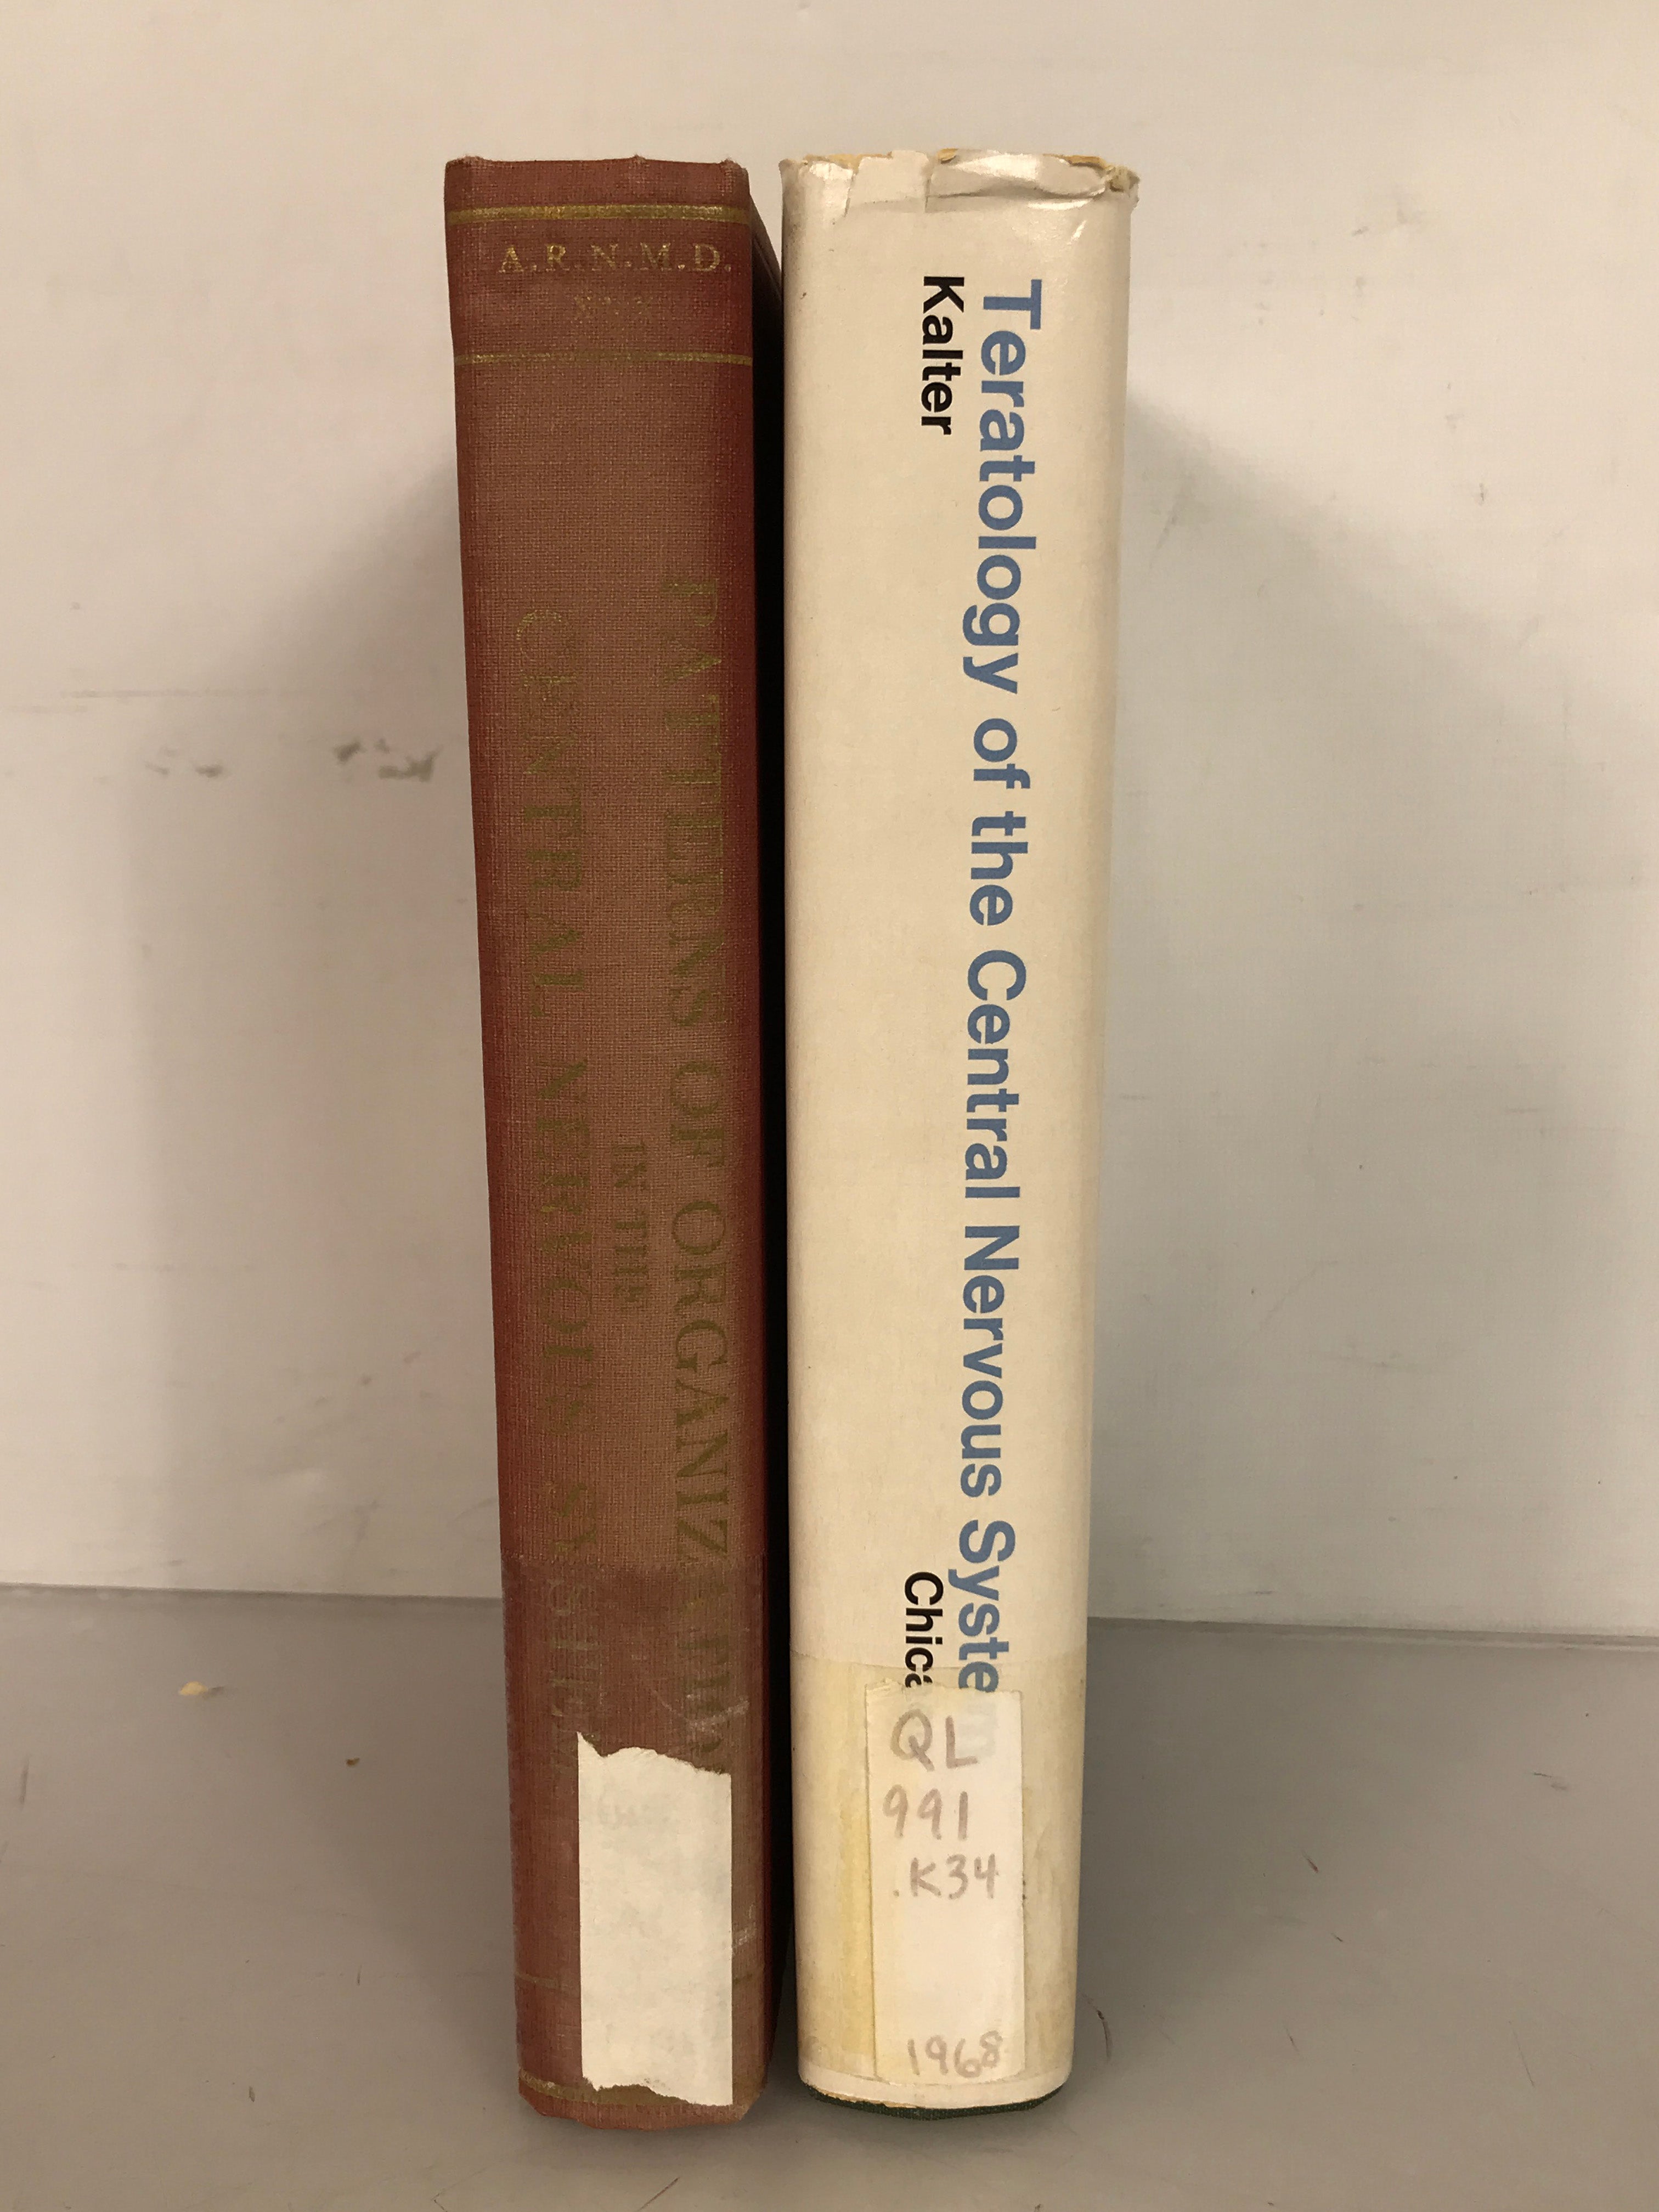 Lot of 2 Central Nervous System Books: Patterns of Organization in the Central Nervous System and Teratology of the Central Nervous System 1968 HC DJ